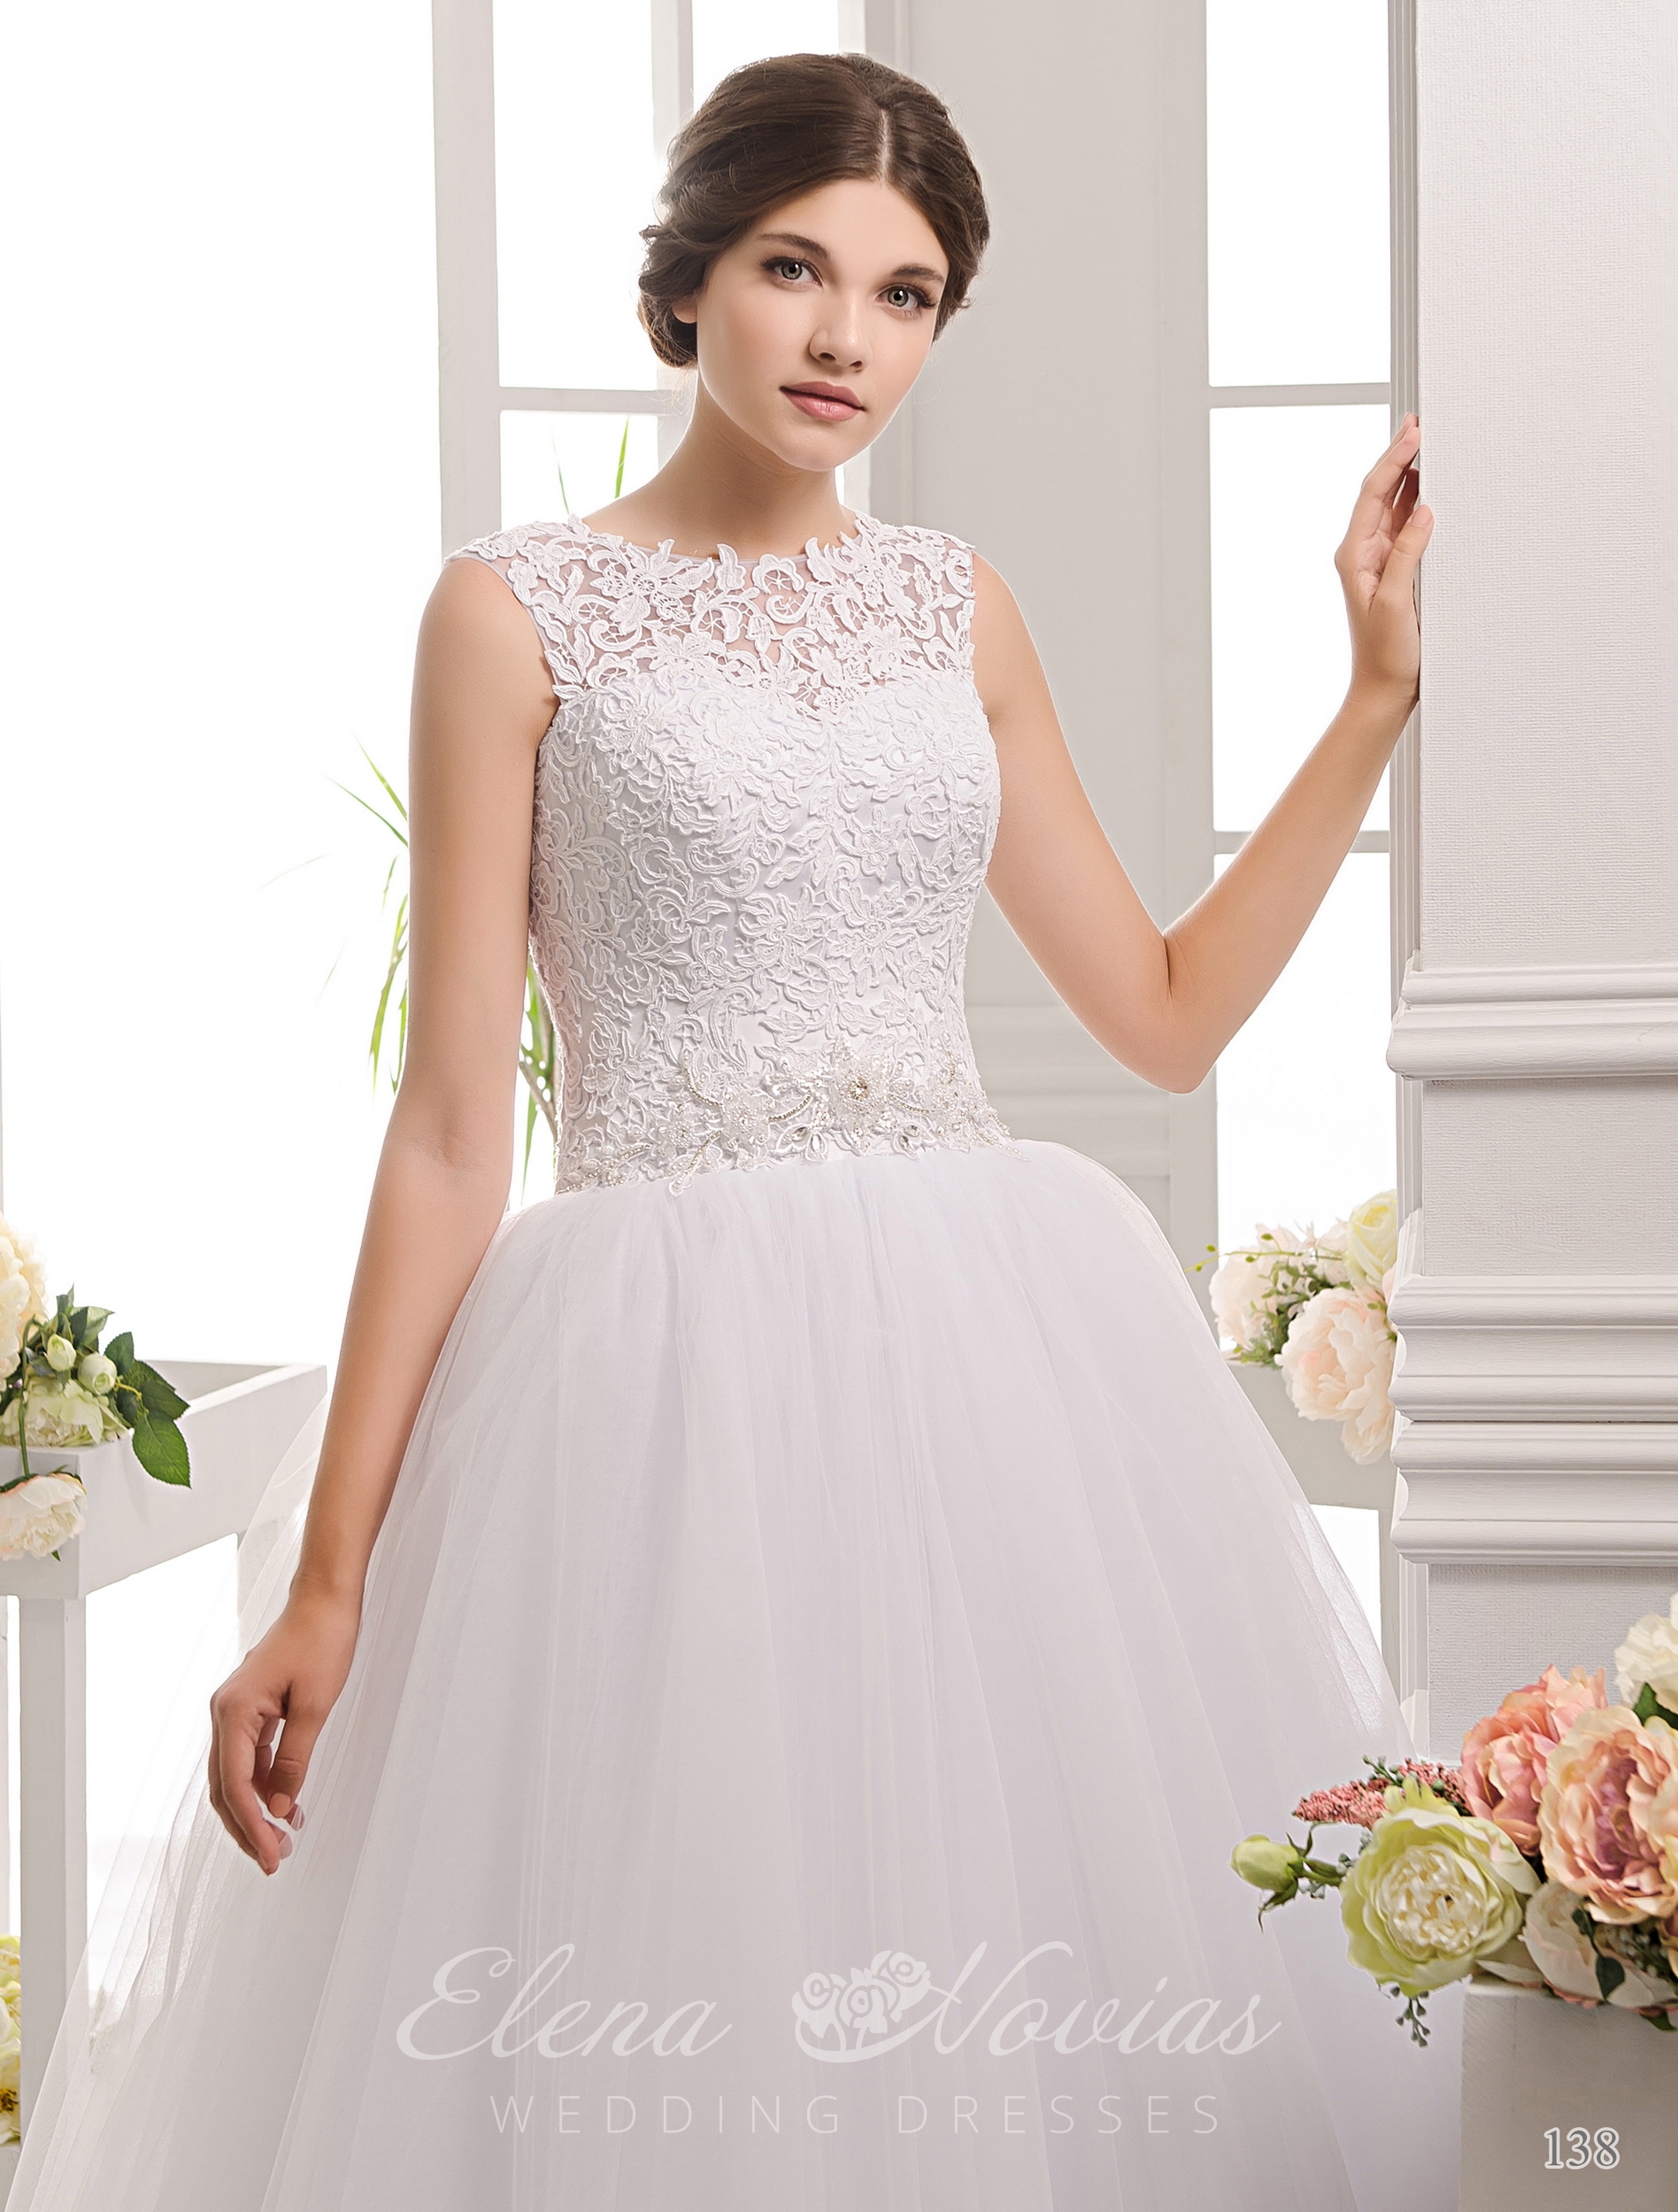 Wedding dress wholesale 138